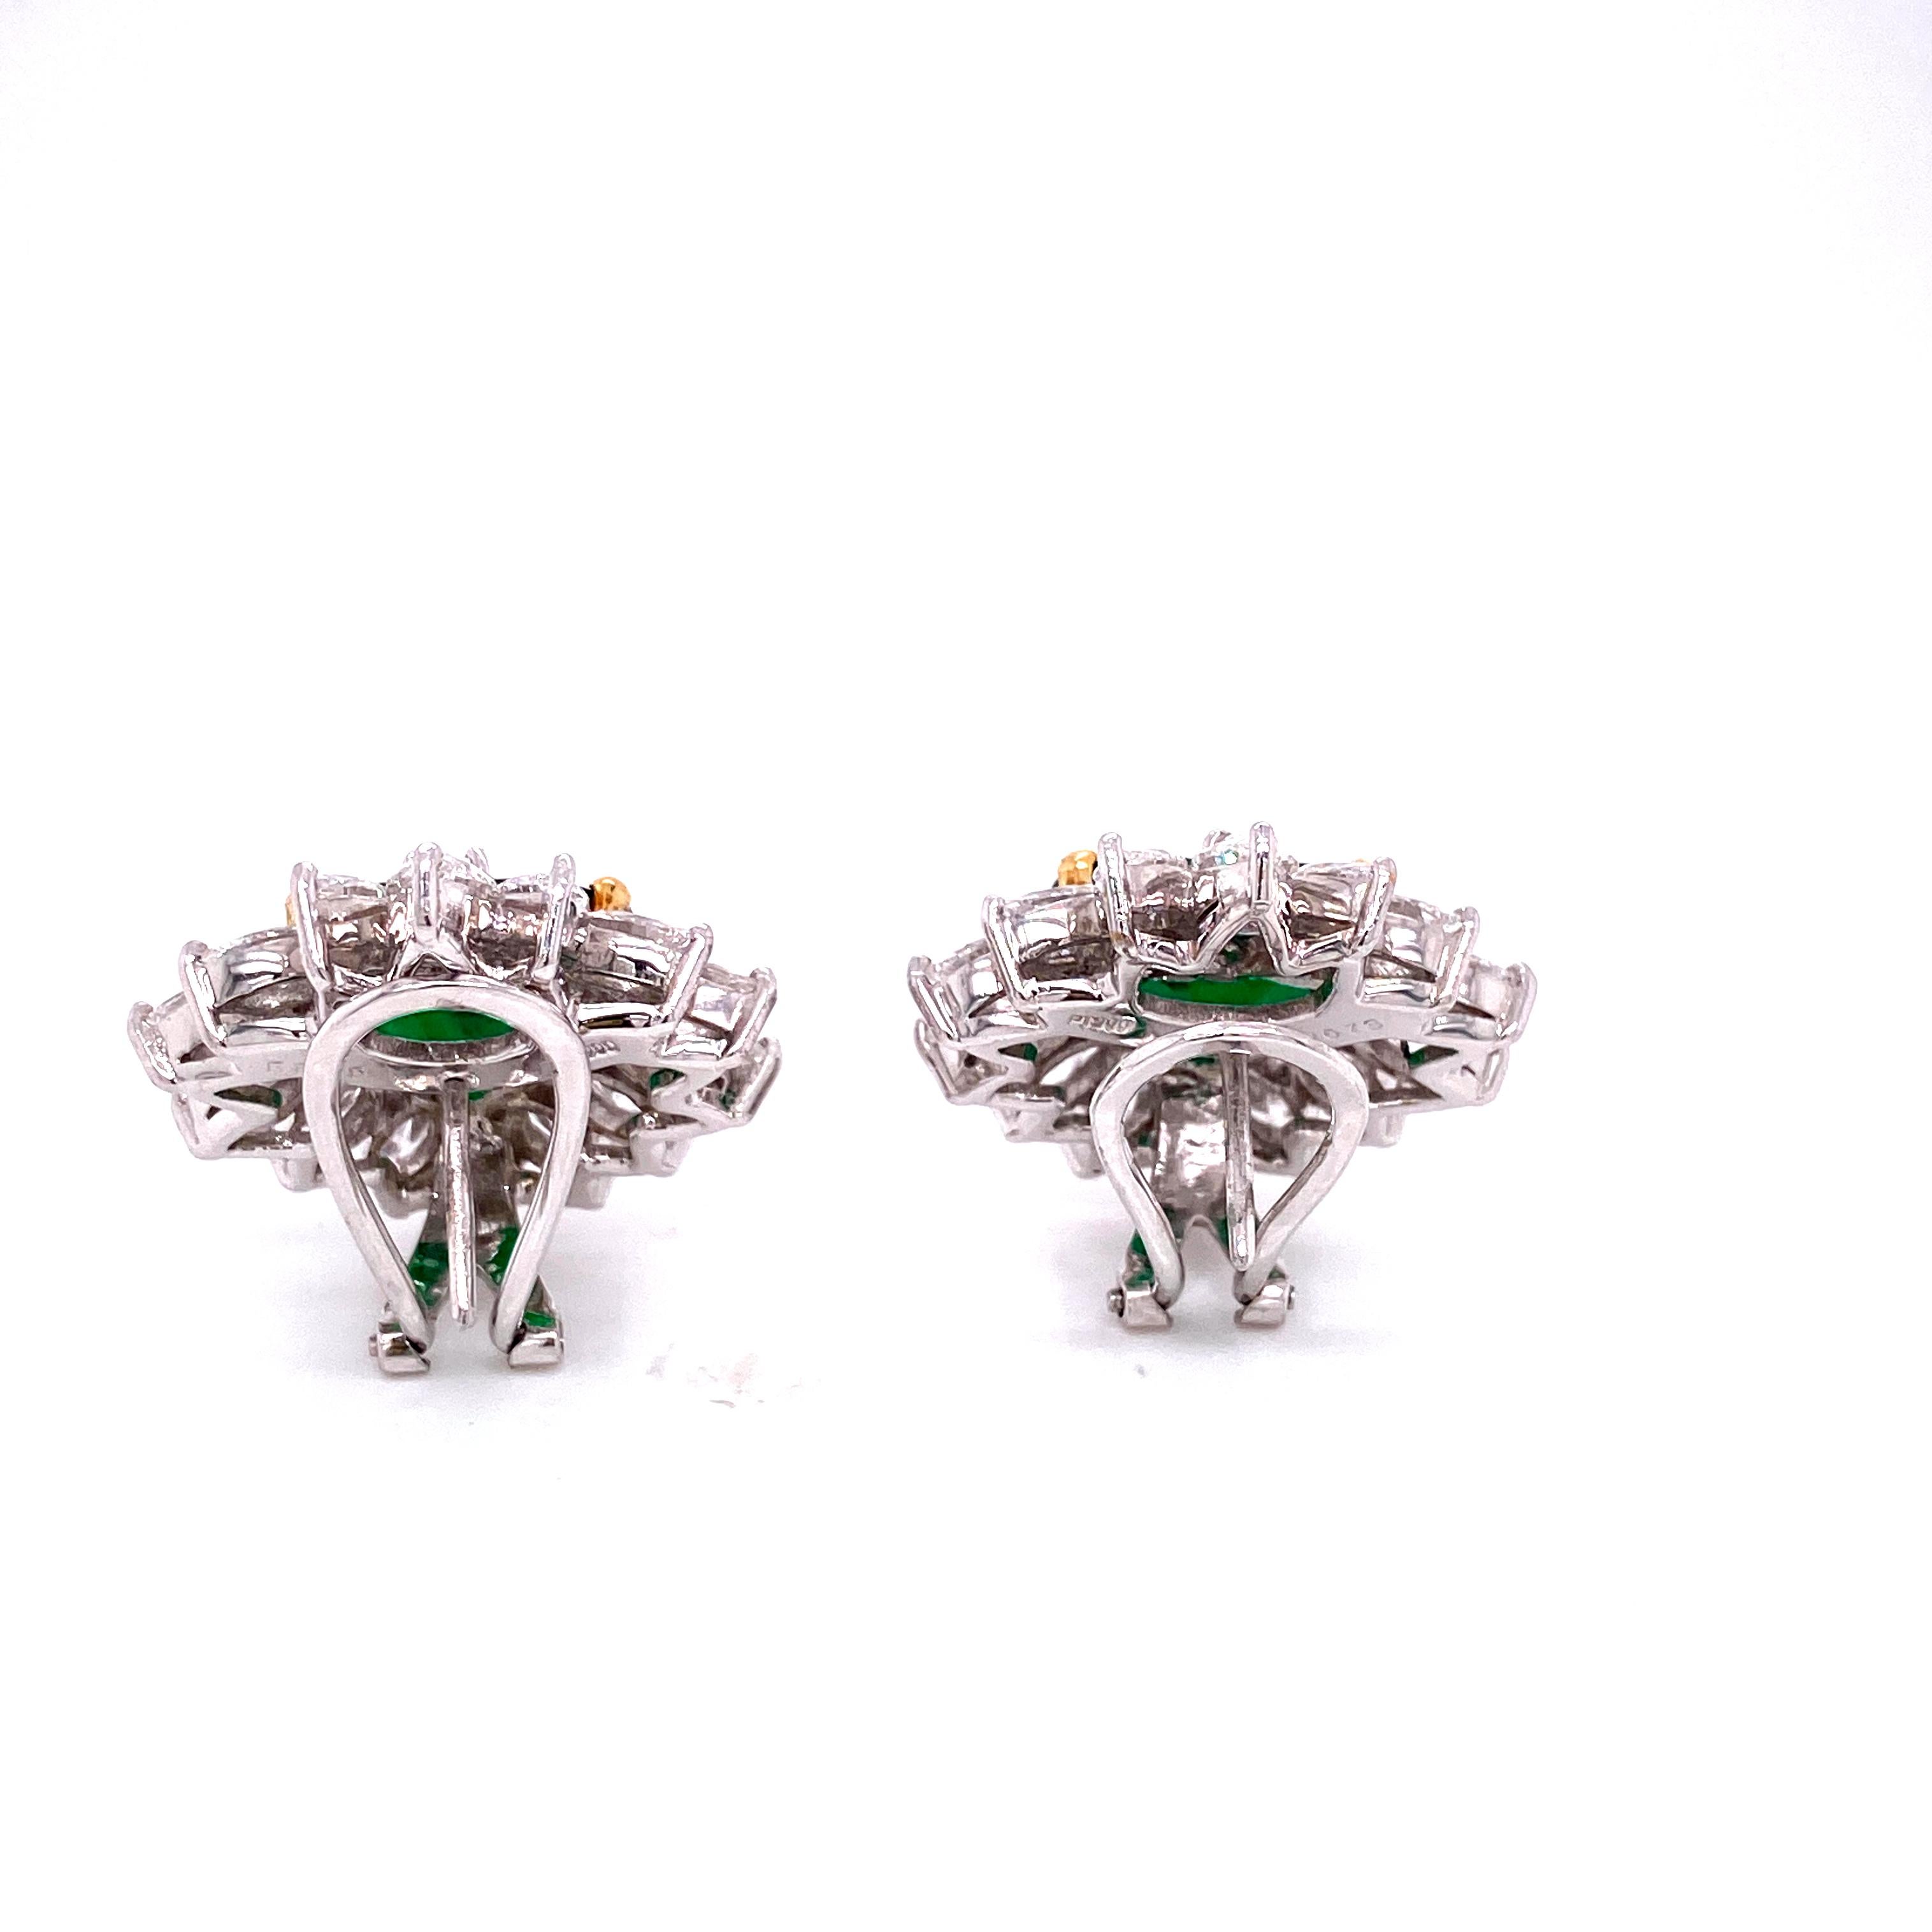 Heart Cut 8.34 Carat Gubelin Certified Heart Shaped Emerald and White Diamond Earrings For Sale